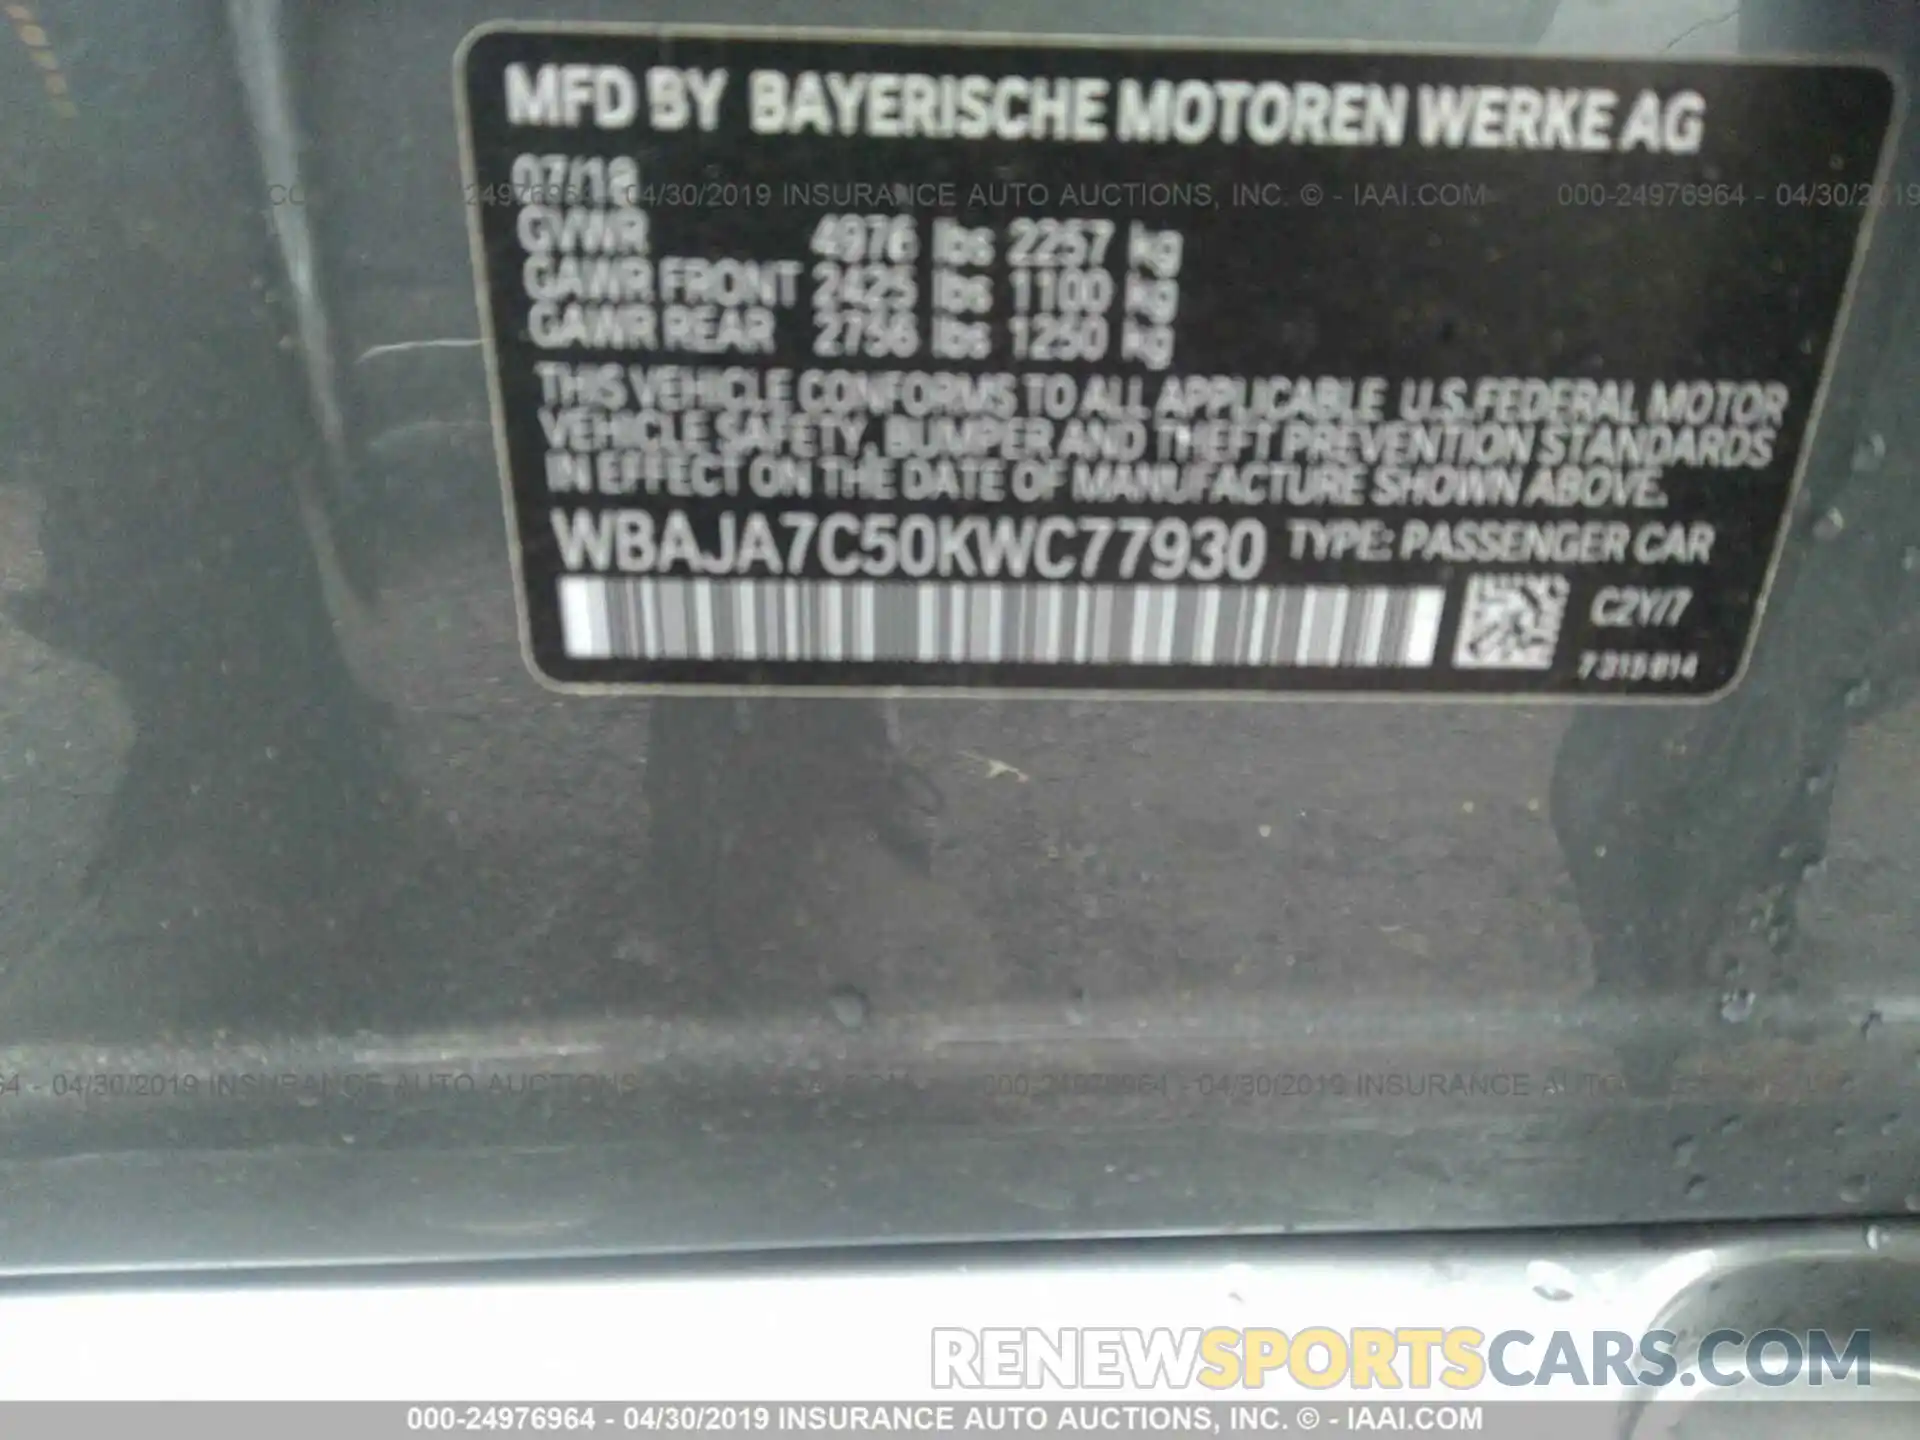 9 Photograph of a damaged car WBAJA7C50KWC77930 BMW 530 2019